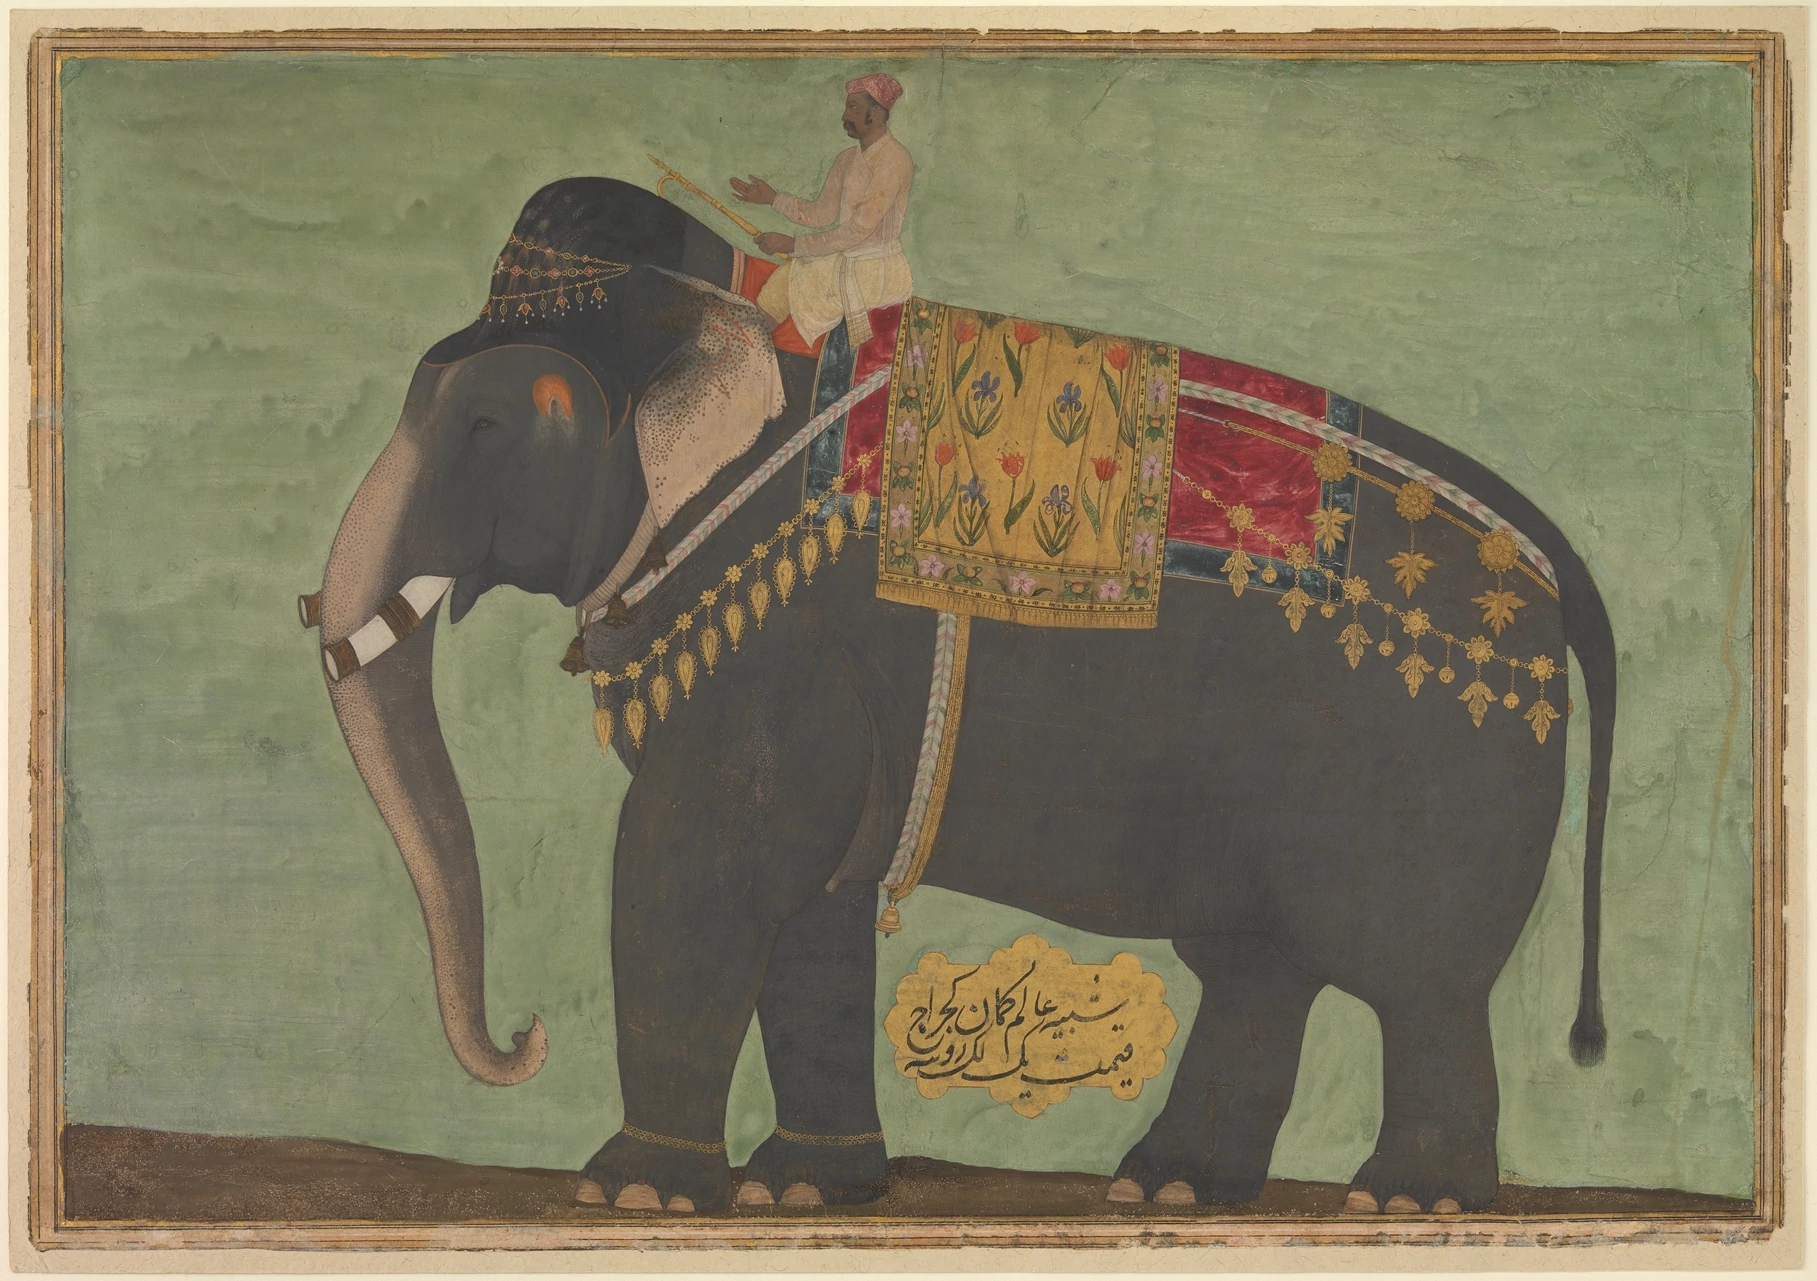 Portrait of the Elephant 'Alam Guman, Bichitr